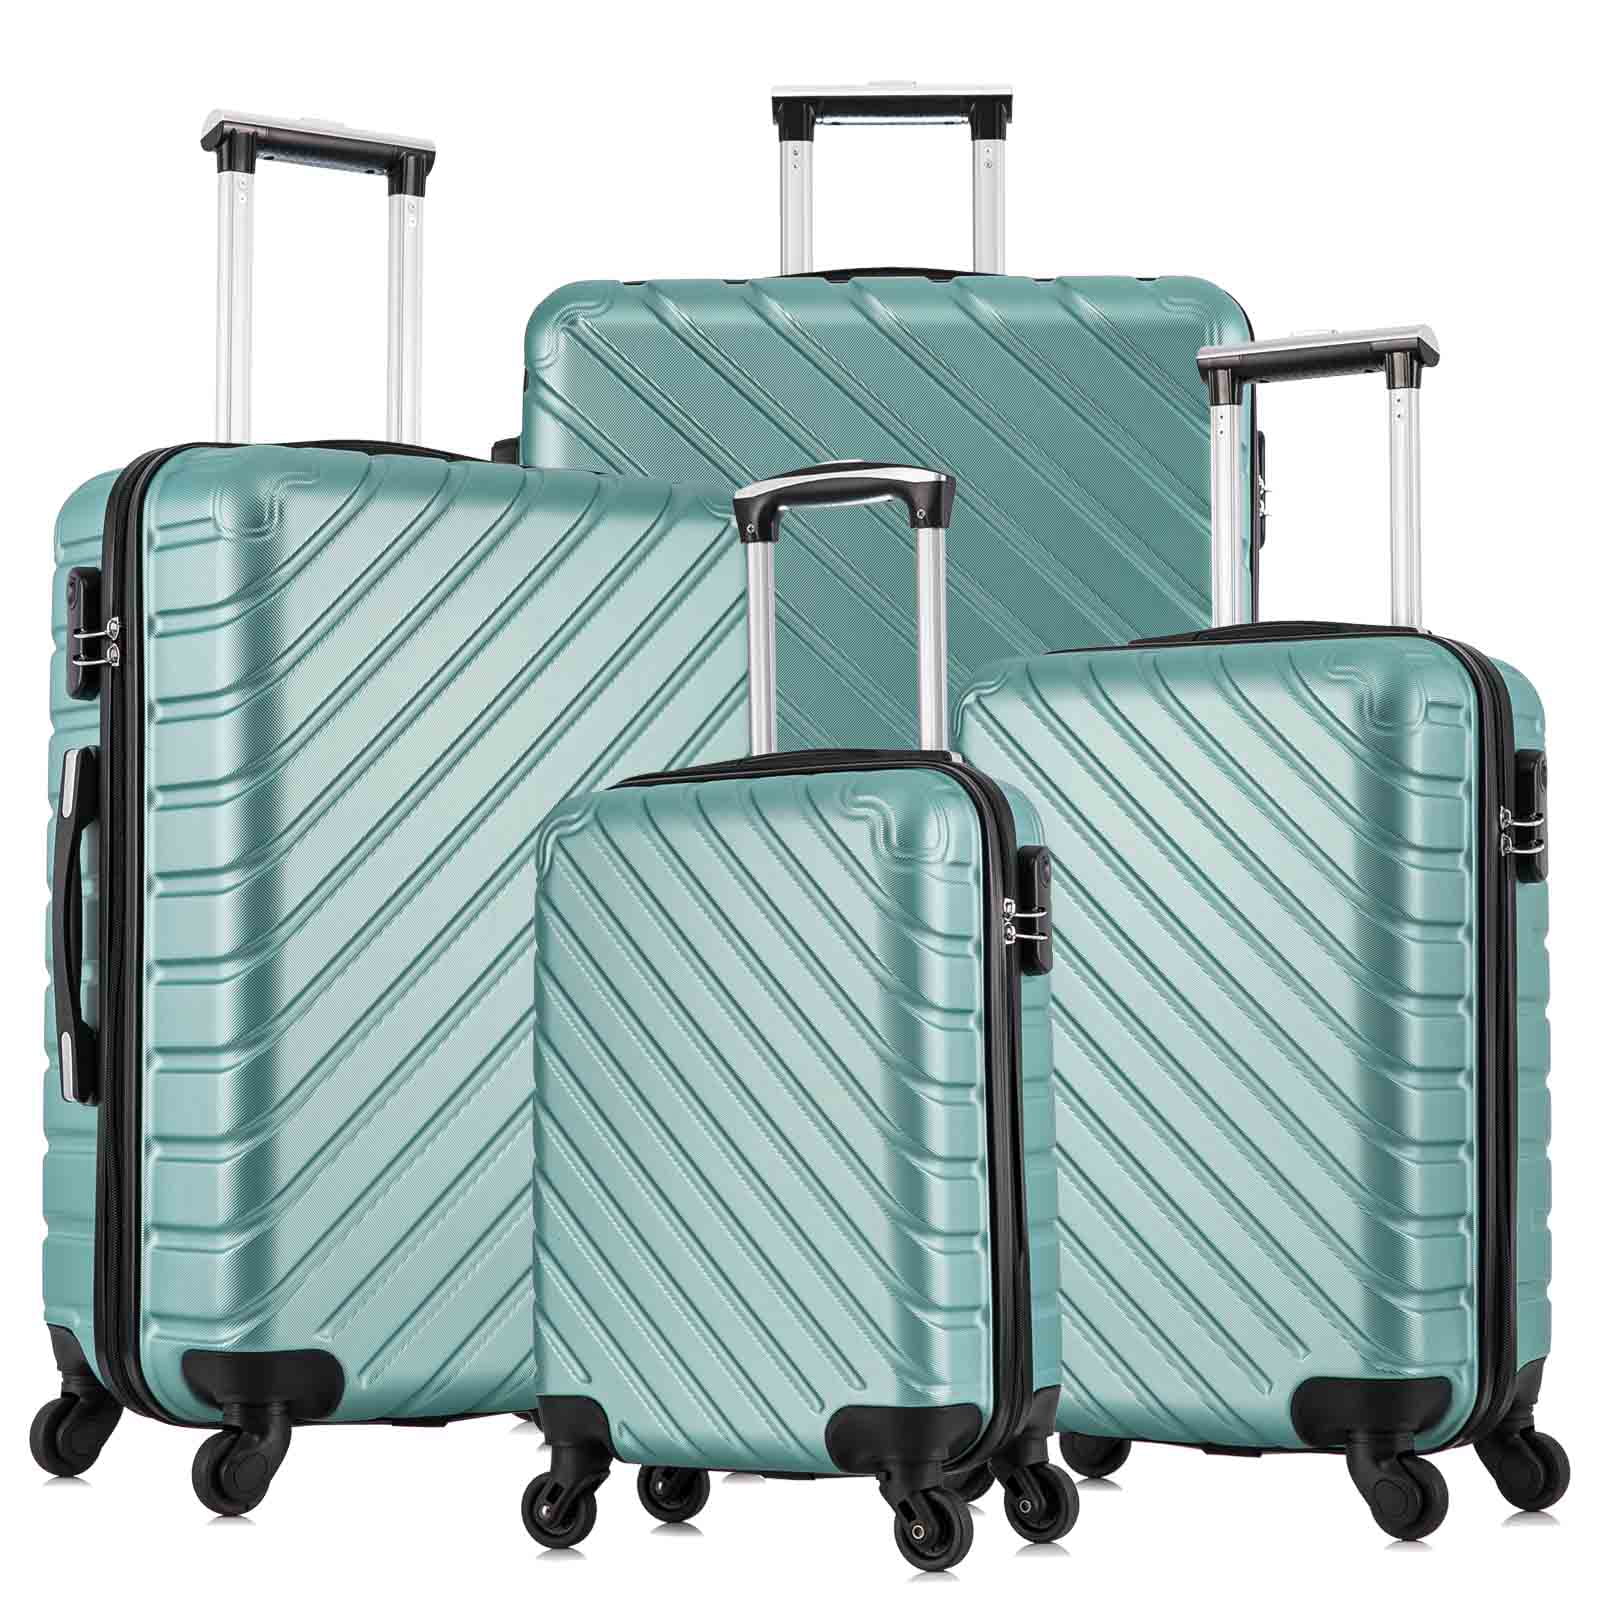 4 Piece Hardshell Luggage Sets,Travel Suitcase,Carry On Luggage with ...